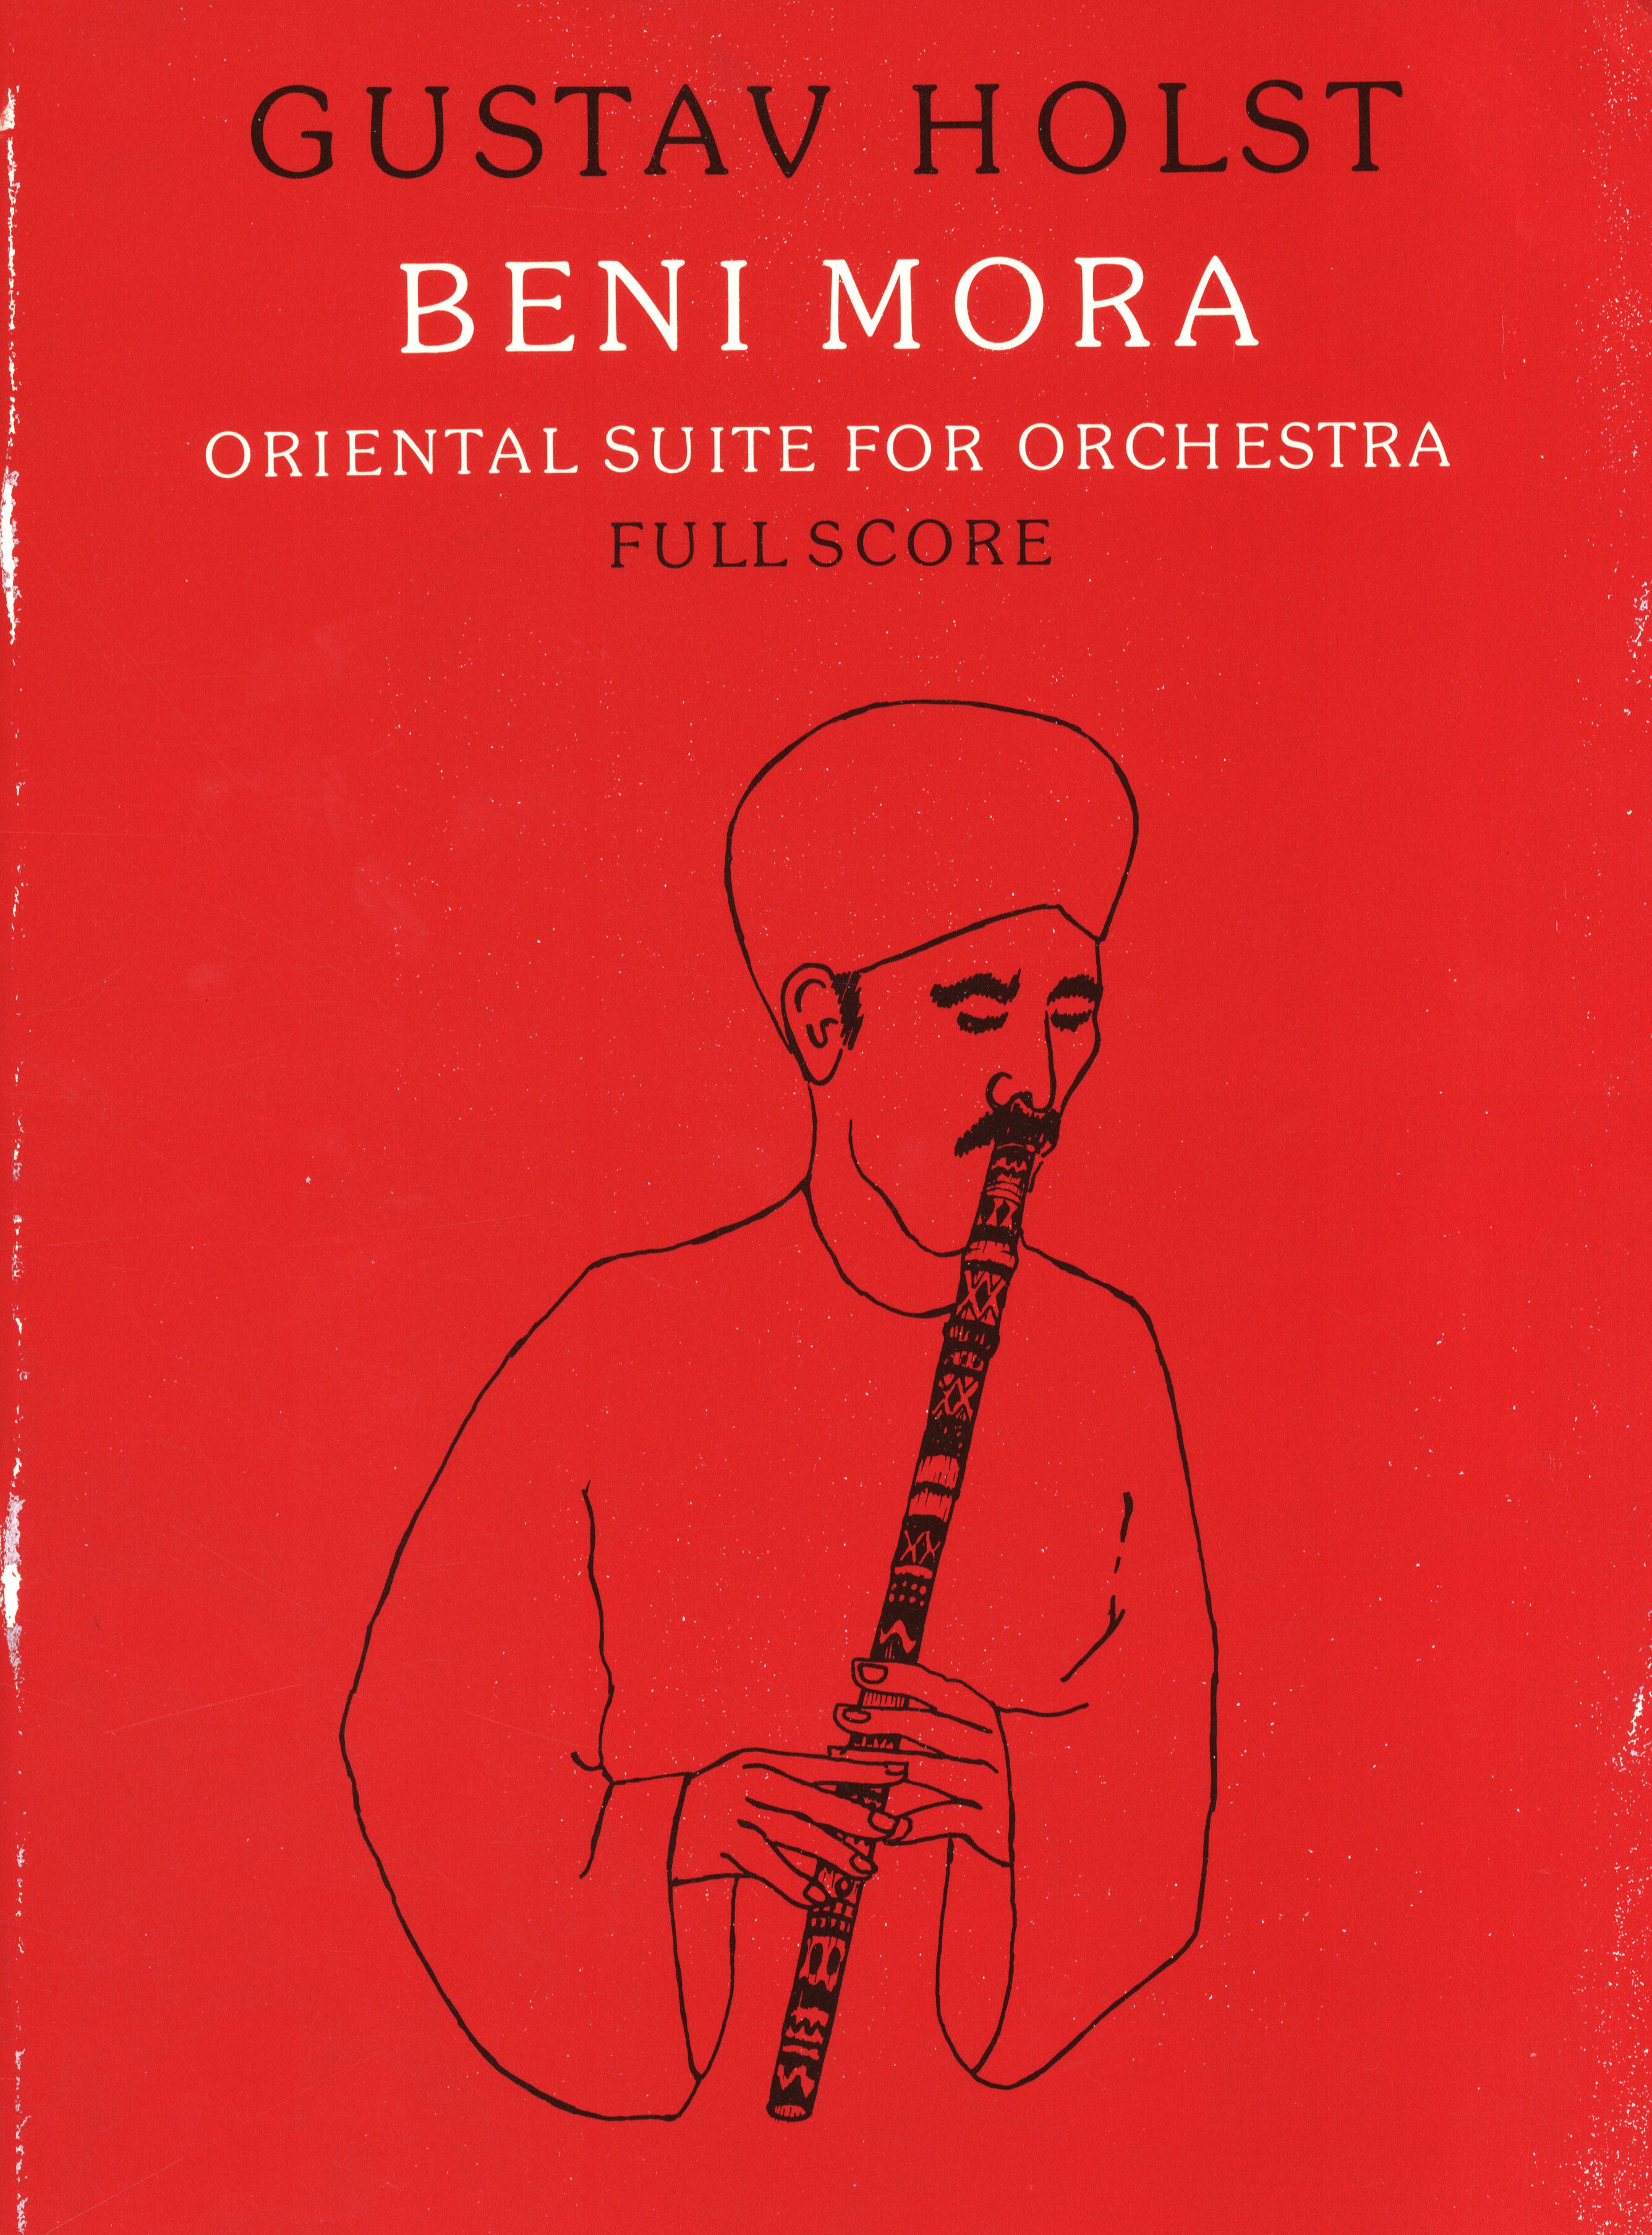 Gustav Holst: Beni Mora Op. 29 No. 1: Orchestra: Score